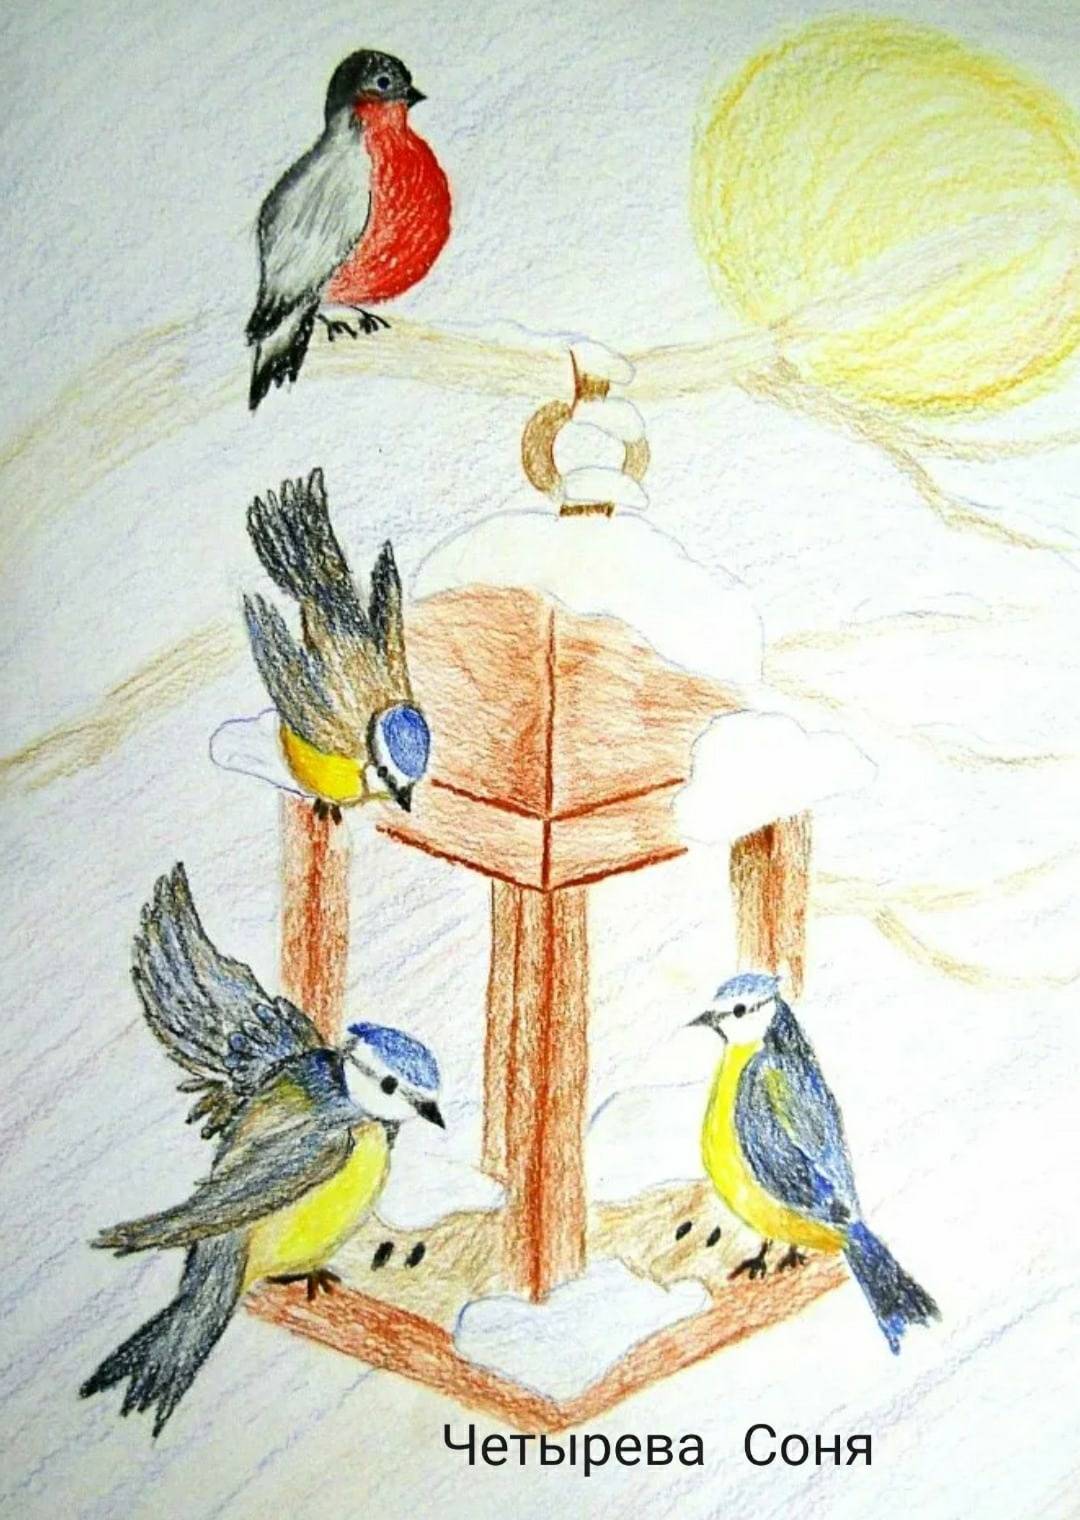 Рисунок ко Дню птиц